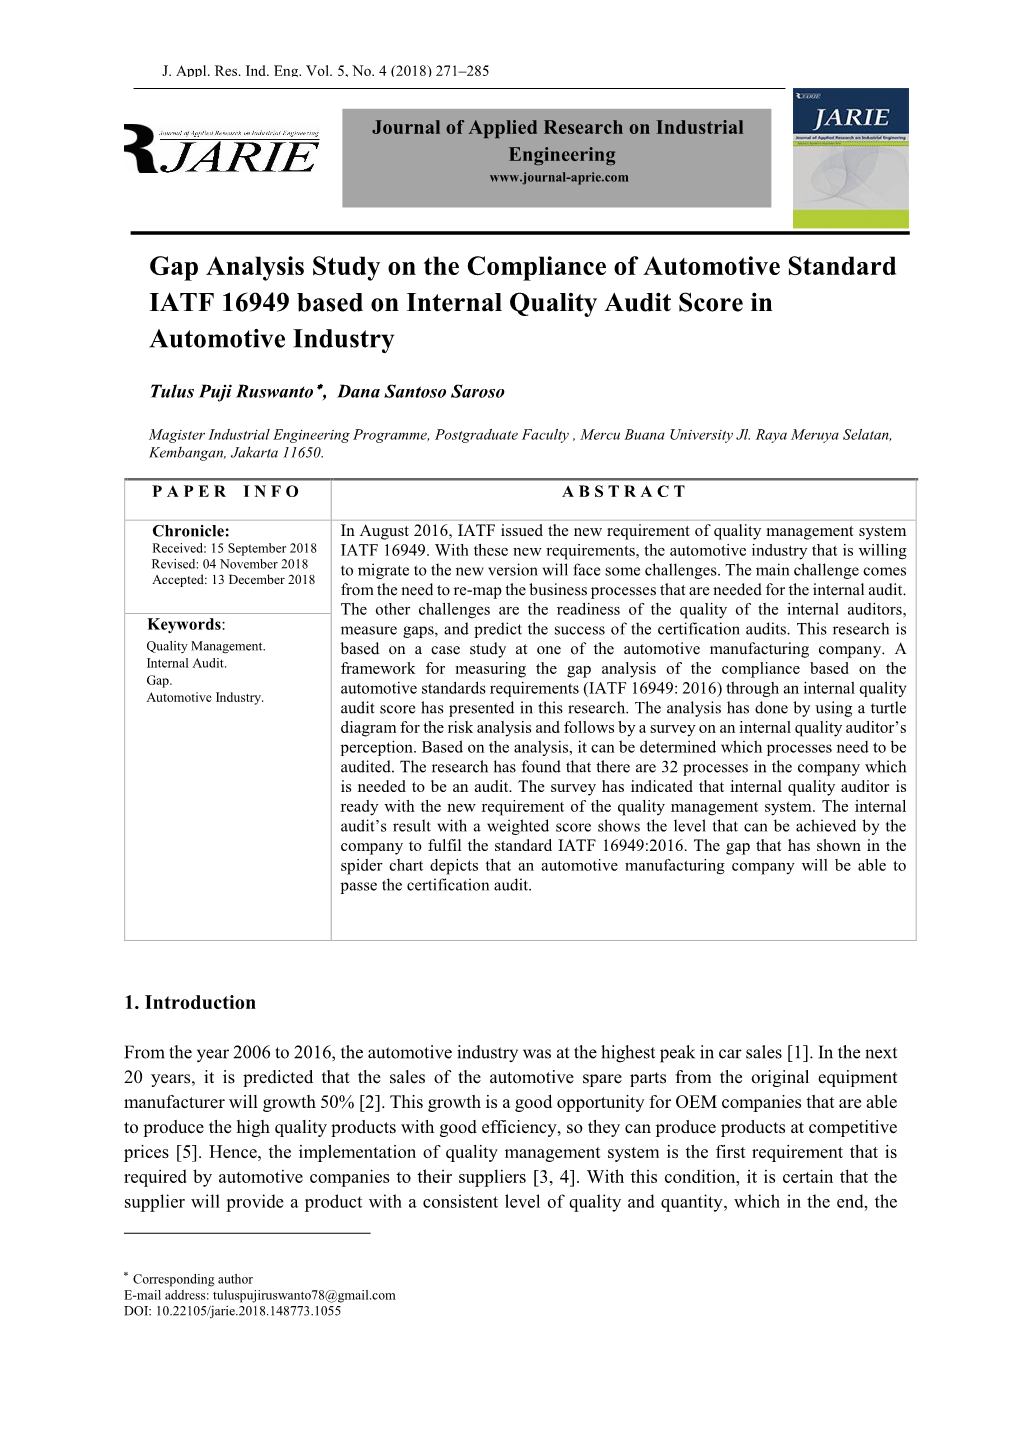 Gap Analysis Study on the Compliance of Automotive Standard IATF 16949 Based on Internal Quality Audit Score in Automotive Industry